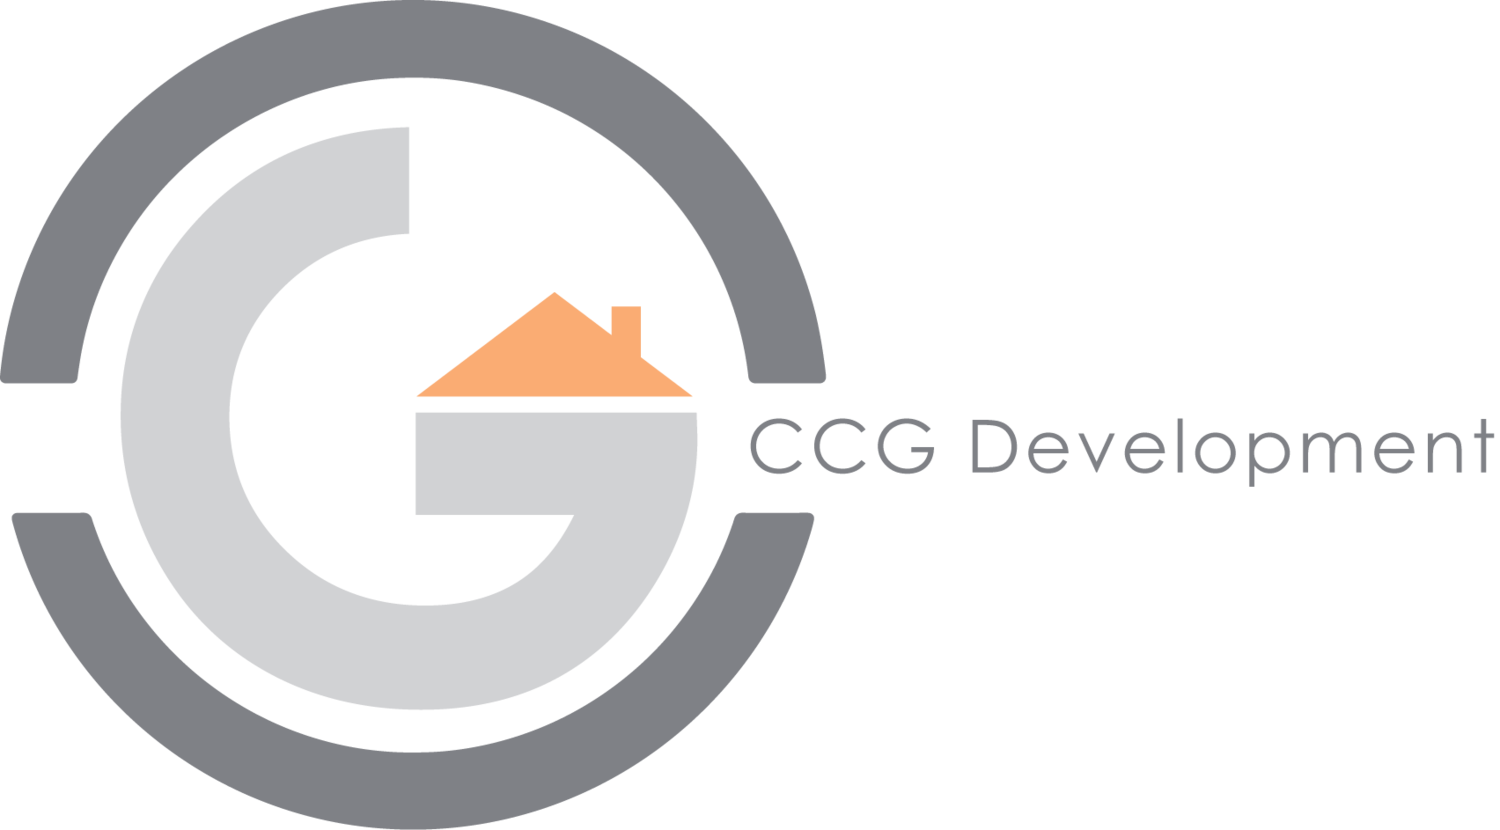 CCG Development